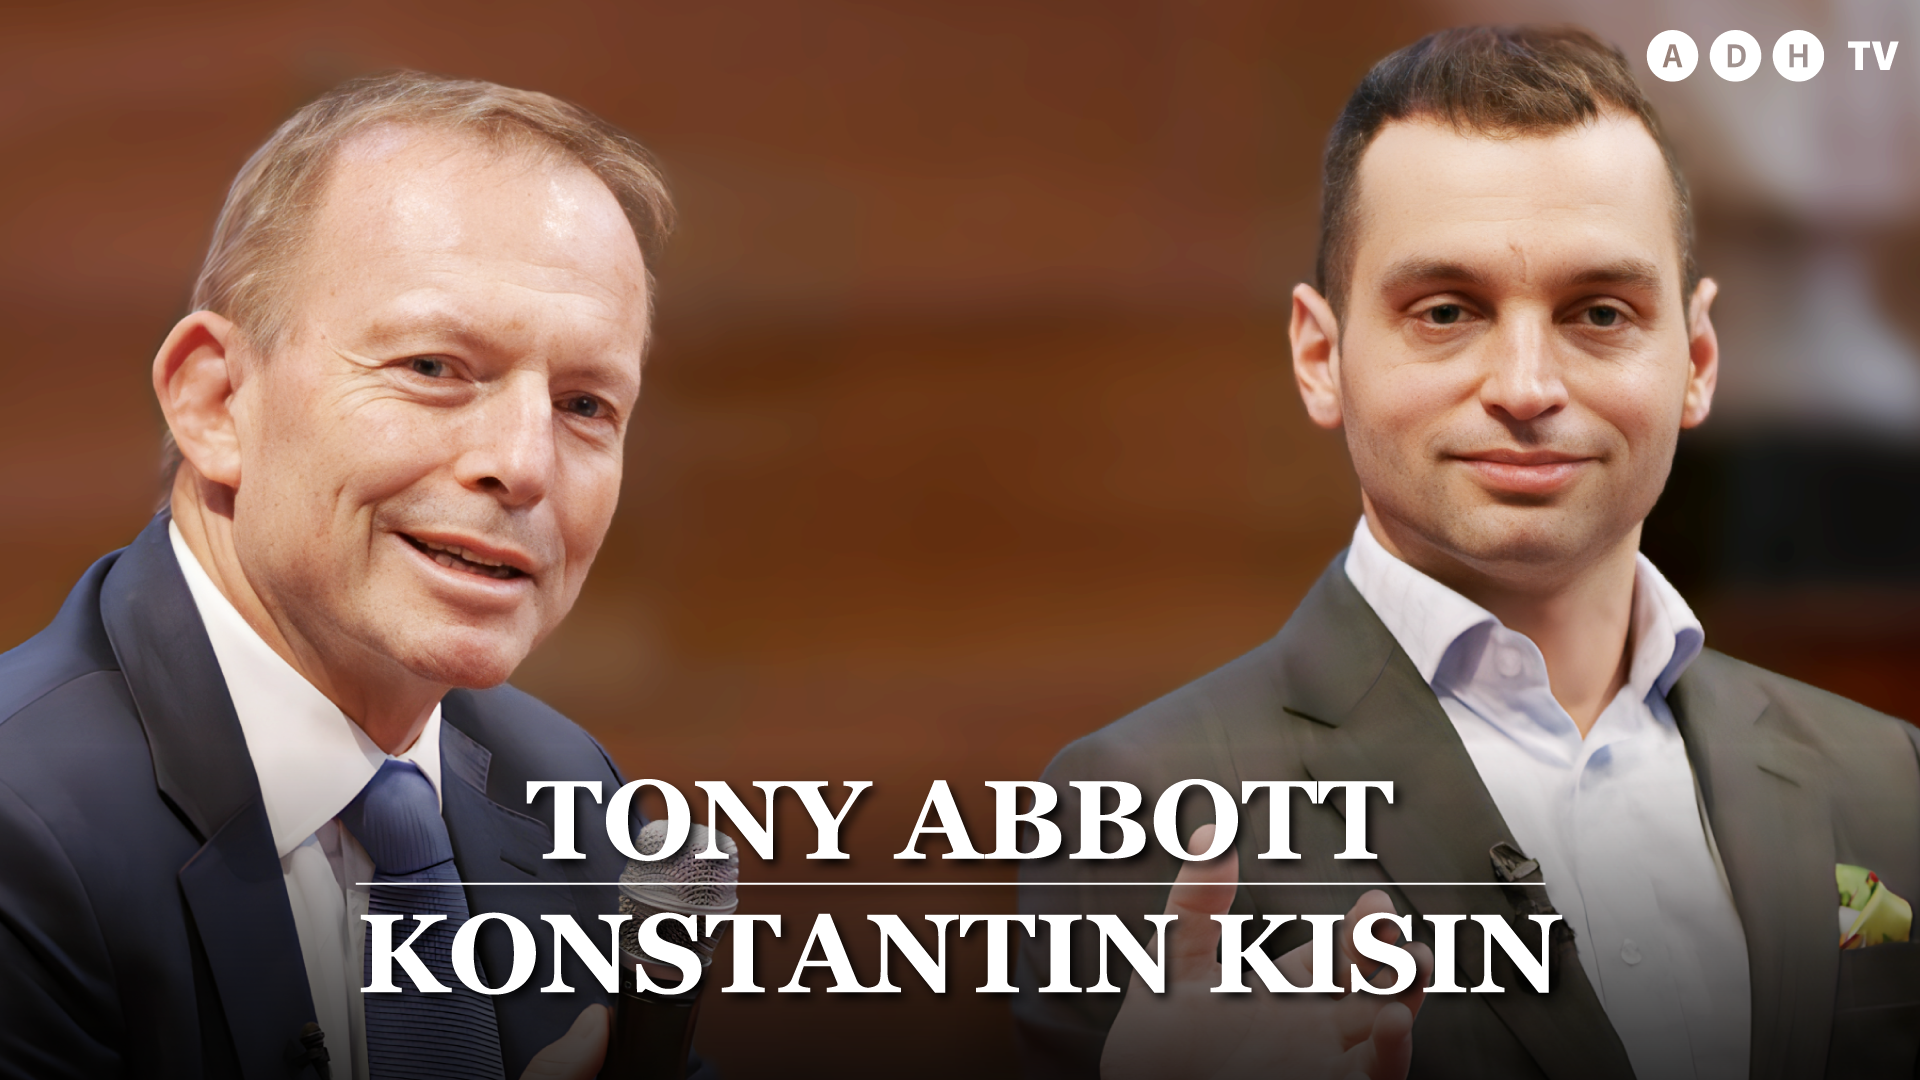 Konstantin Kisin & Tony Abbott 